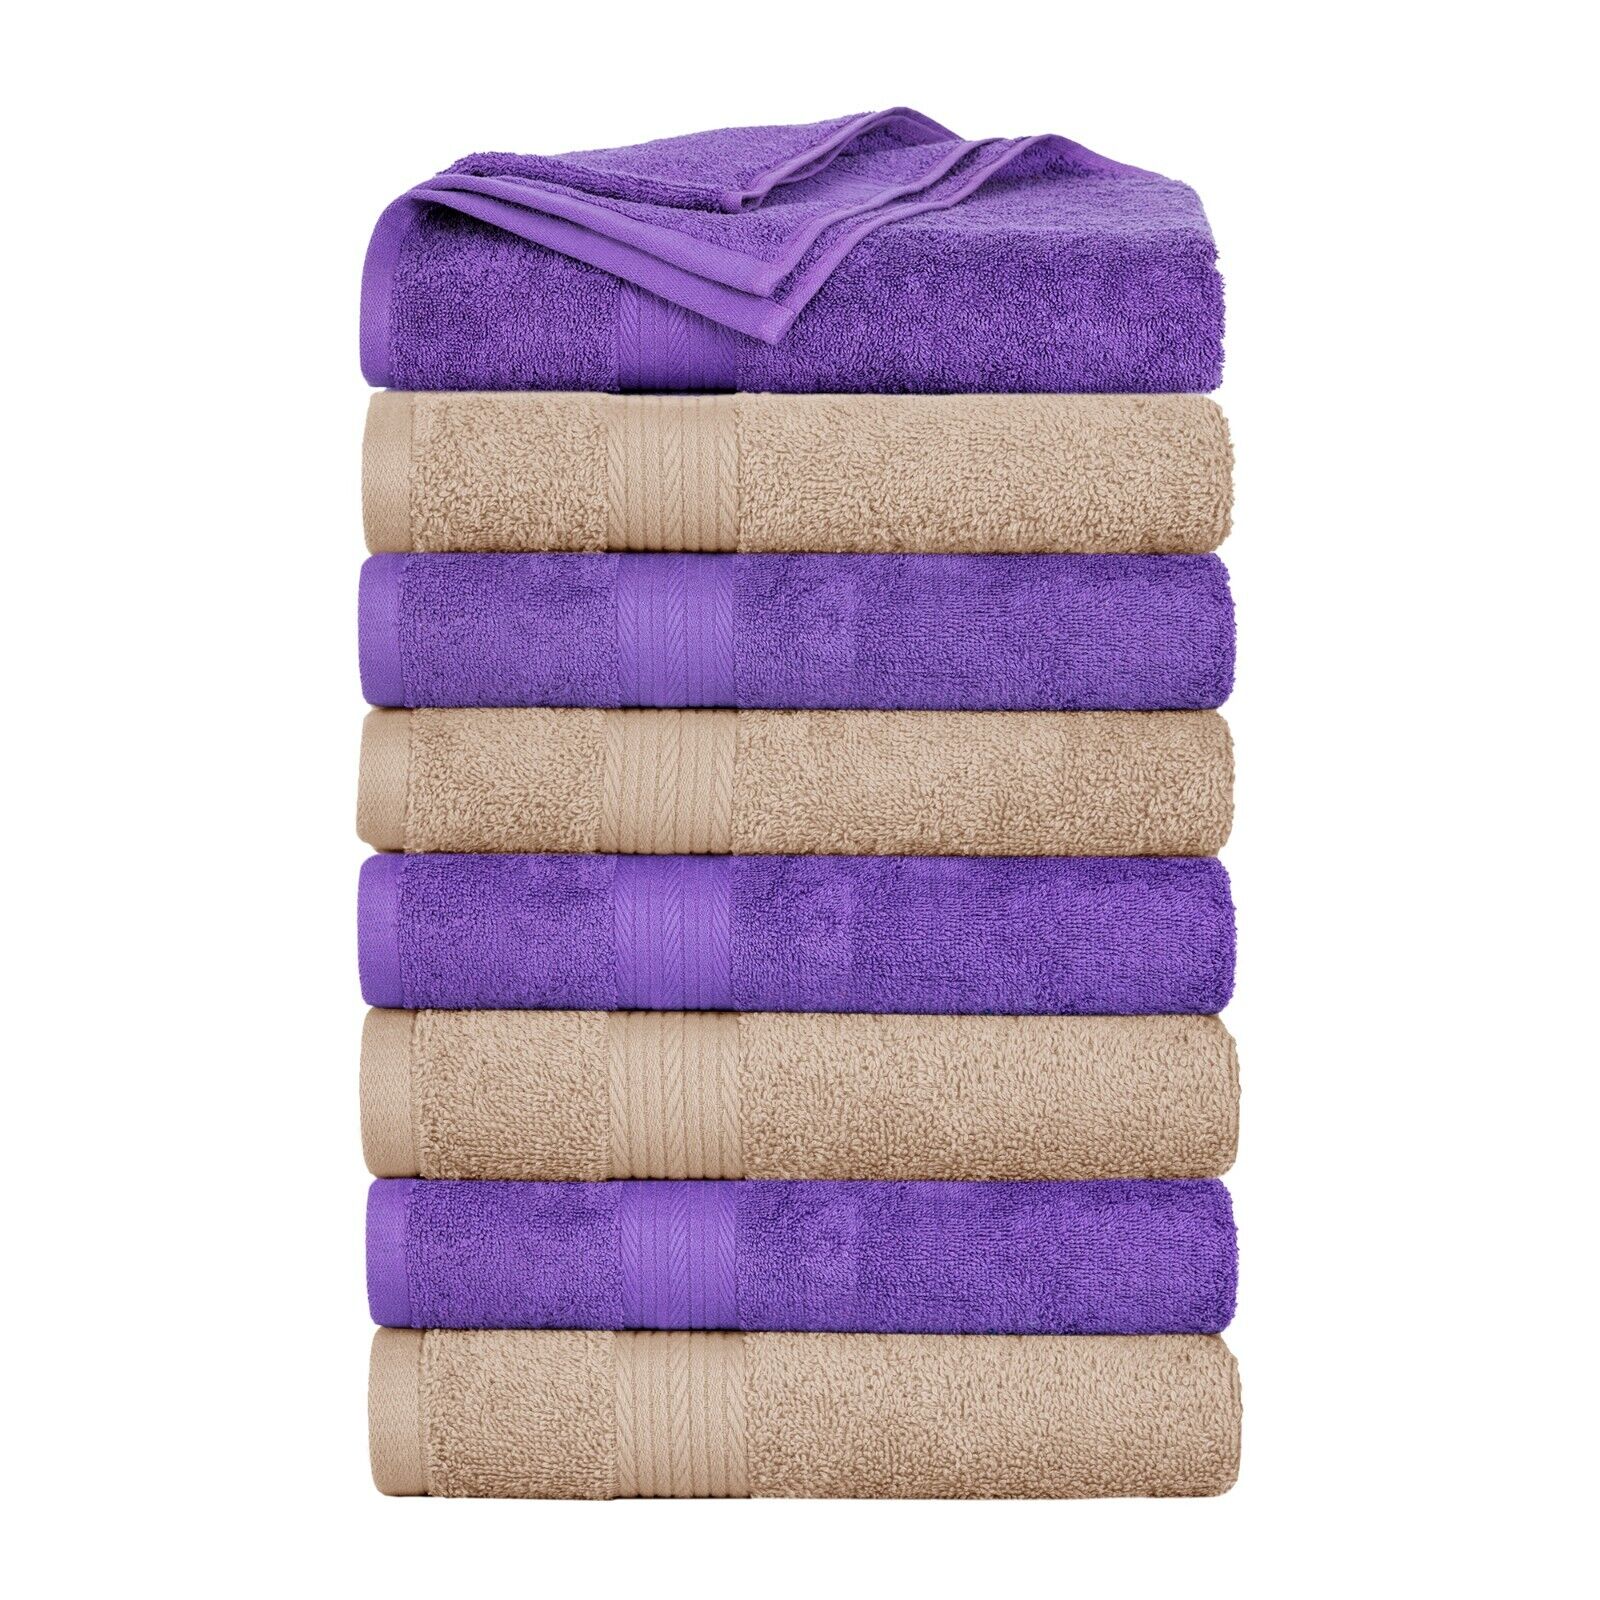 Ample Decor Bath Towel Set of 8 Assorted Color 100% Cotton 600 GSM Soft & Thick